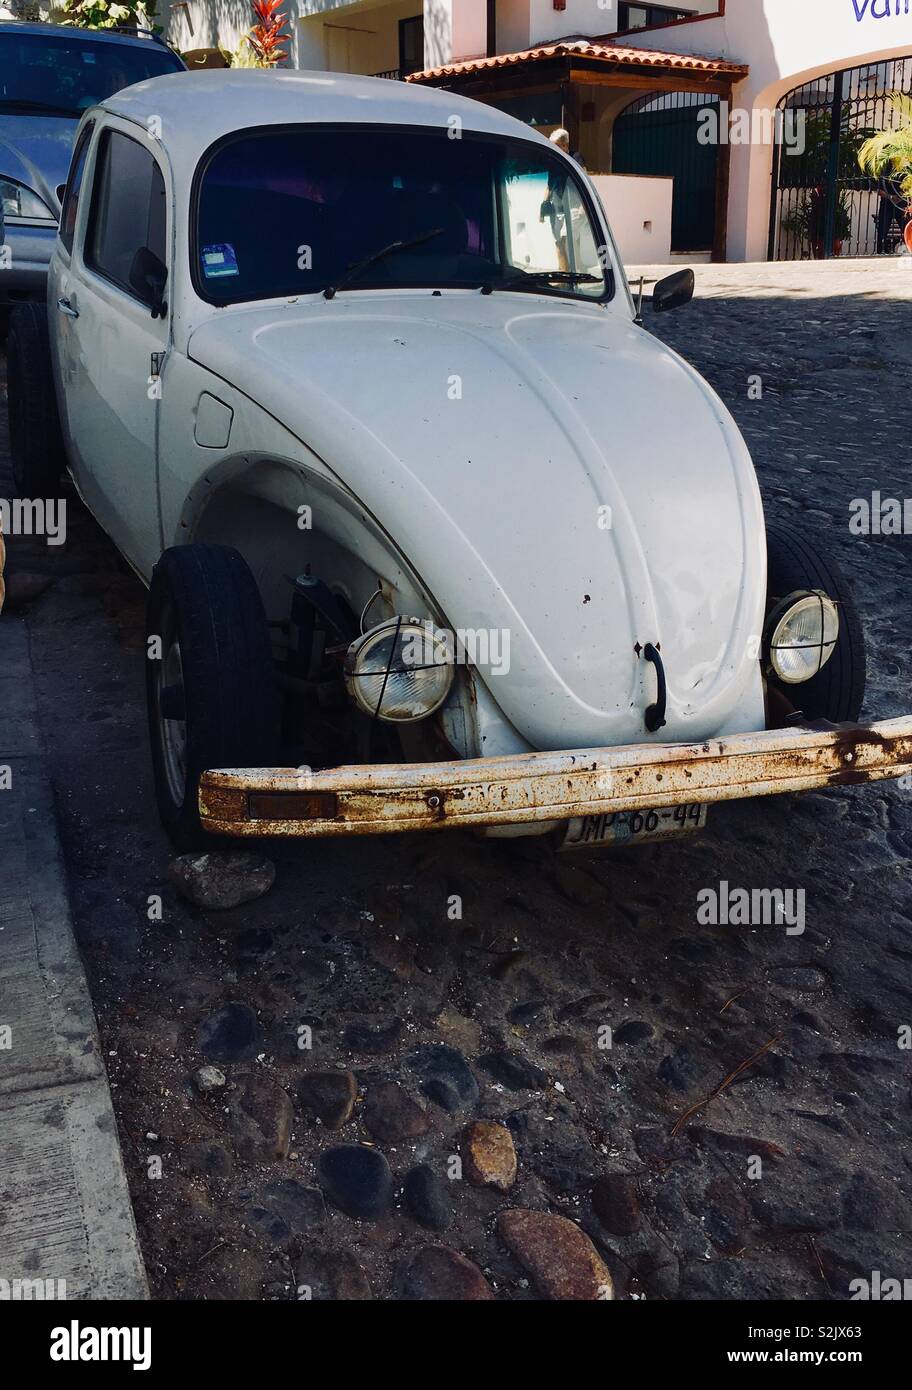 Punch buggy,old beaten up Volkswagen Beetle Stock Photo - Alamy